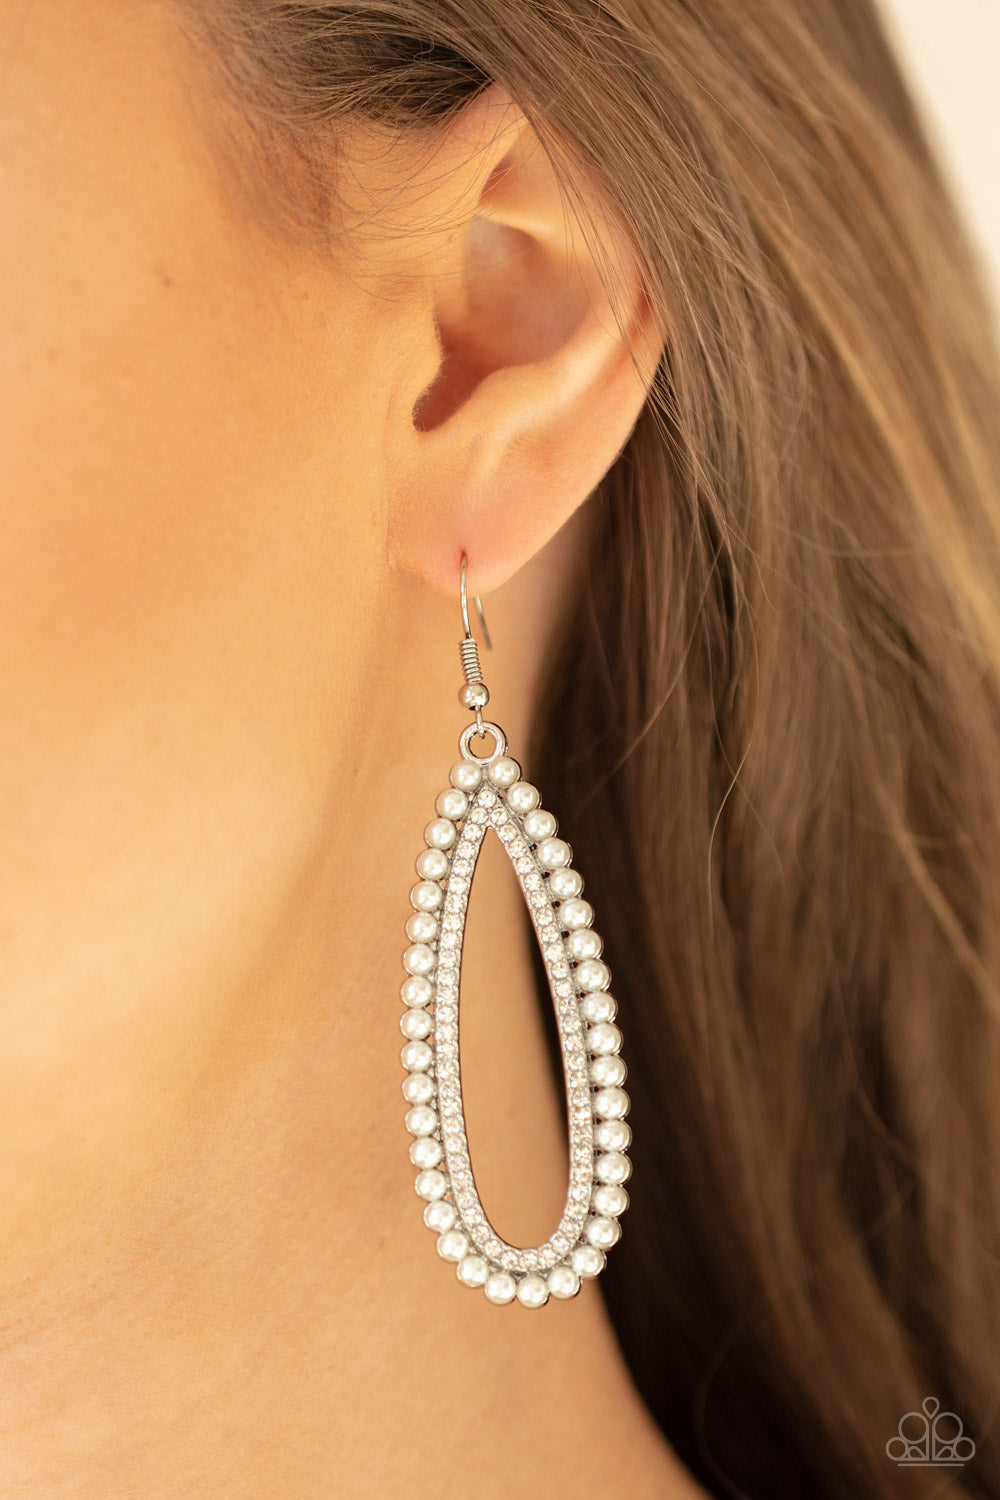 Glamorously Glowing Earrings - White